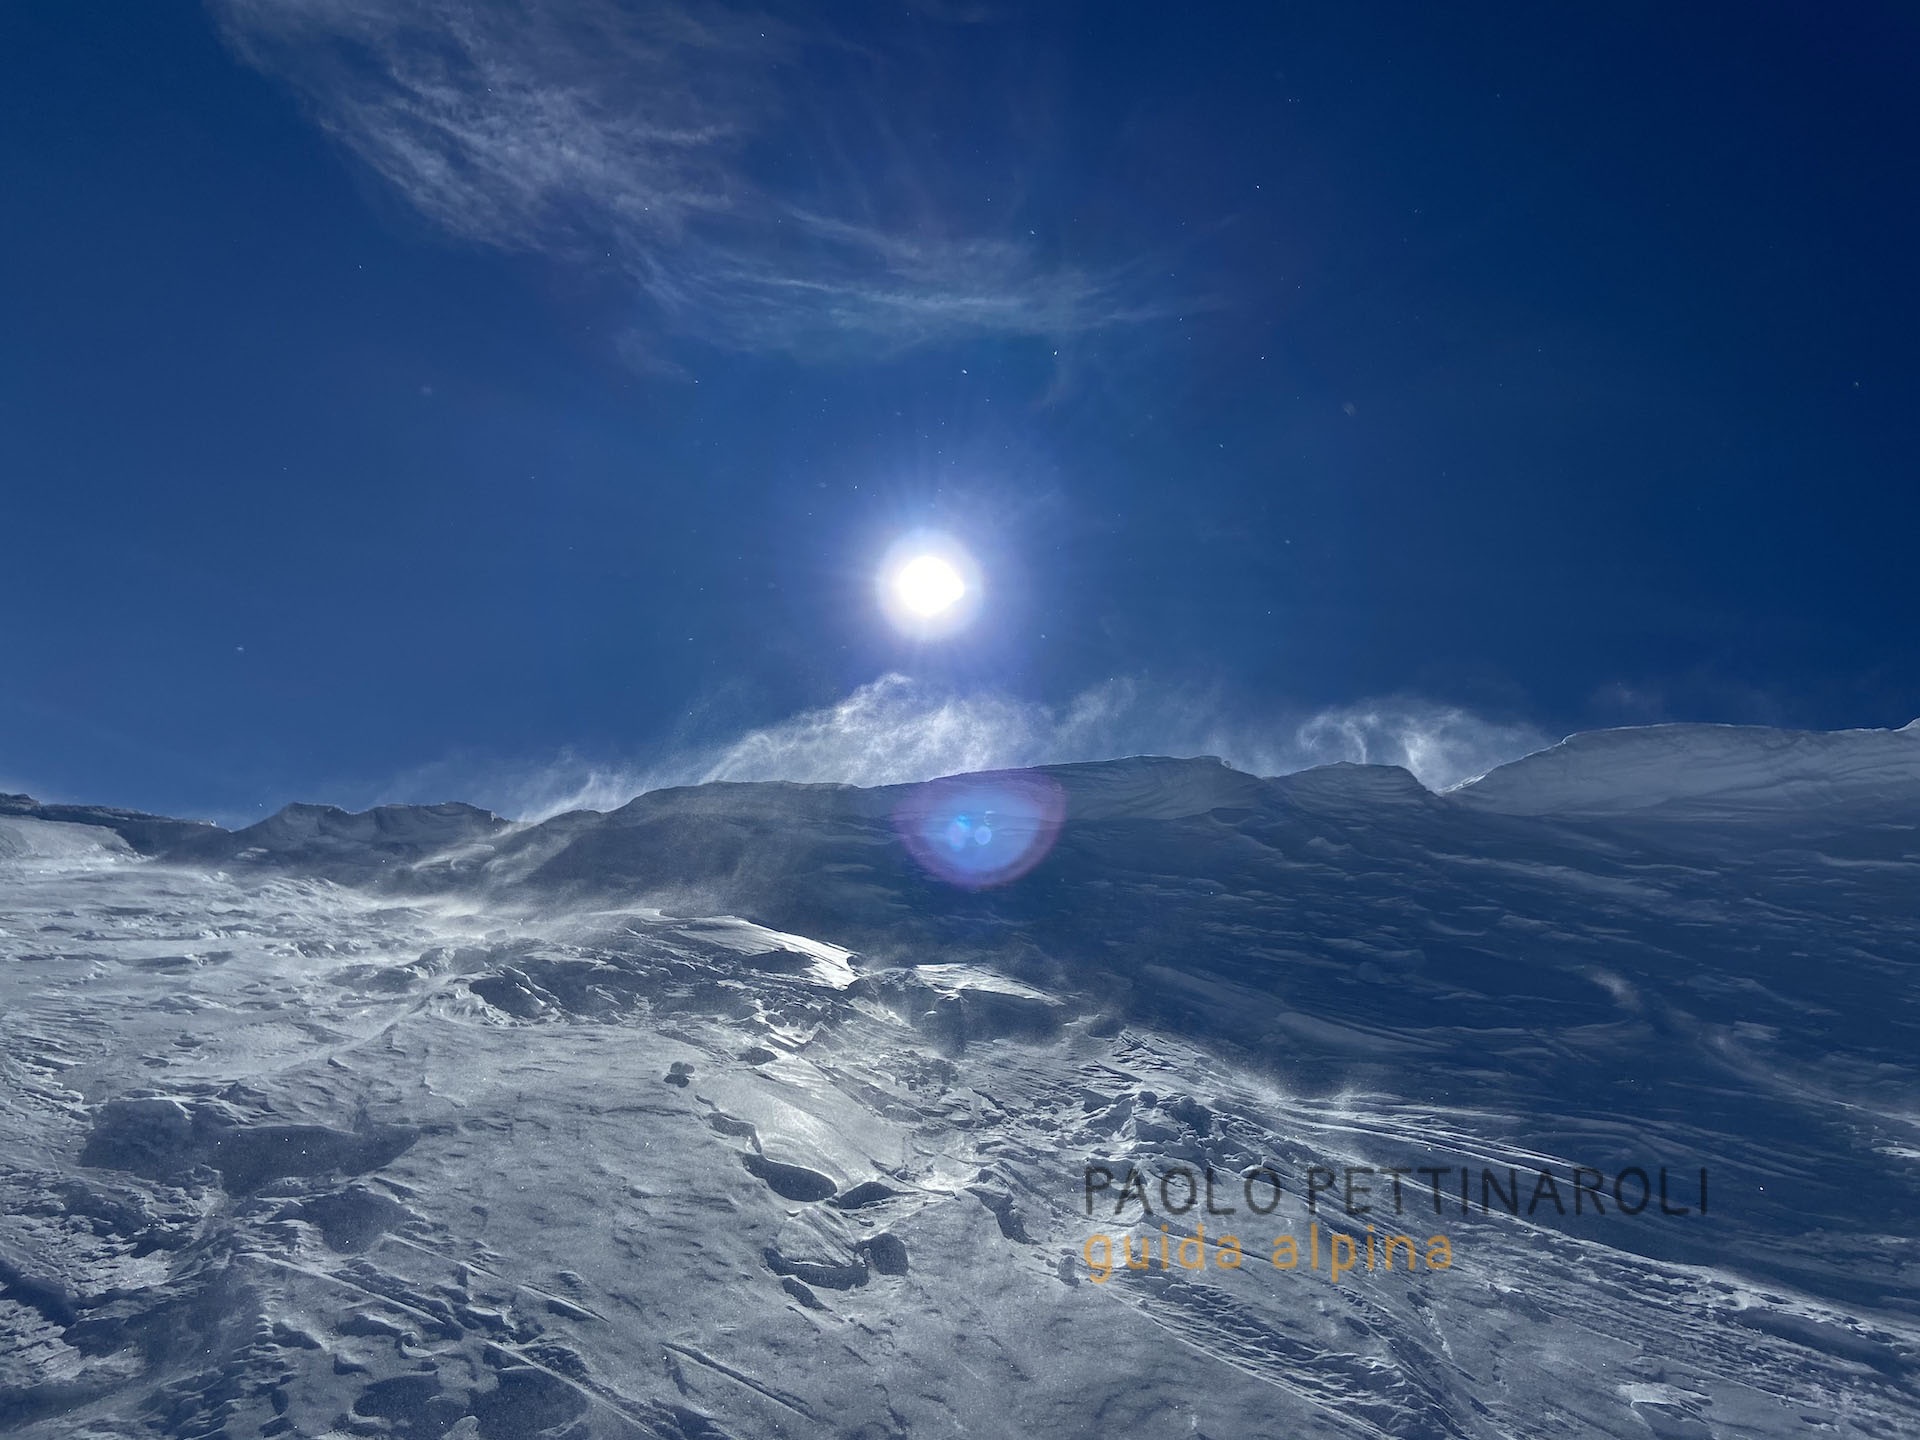 IMG_0780-panorami_paolo pettinaroli guida alpina